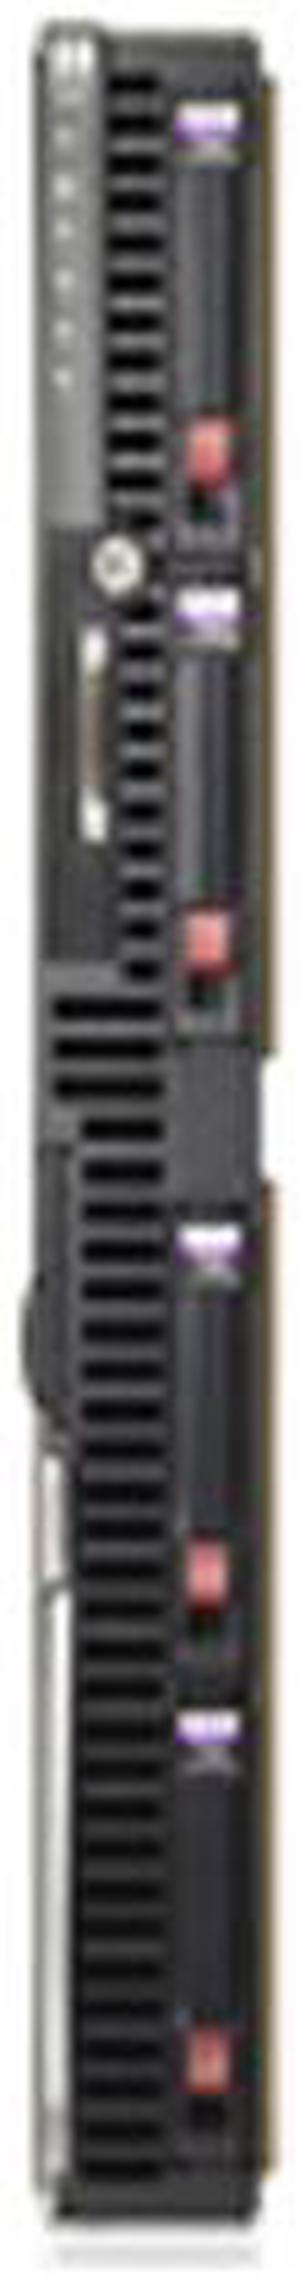 HP ProLiant BL480c Blade Dual Xeon E5345 2.33 GHz 4 GB DDR2 Servers 2 x Quad-Core Intel Xeon E5345 (2.33 GHz, 1333 MHz FSB) 4 GB (4 x 1 GB) PC2-5300 Fully Buffered DIMMs running at 667 MHz 435462-B21